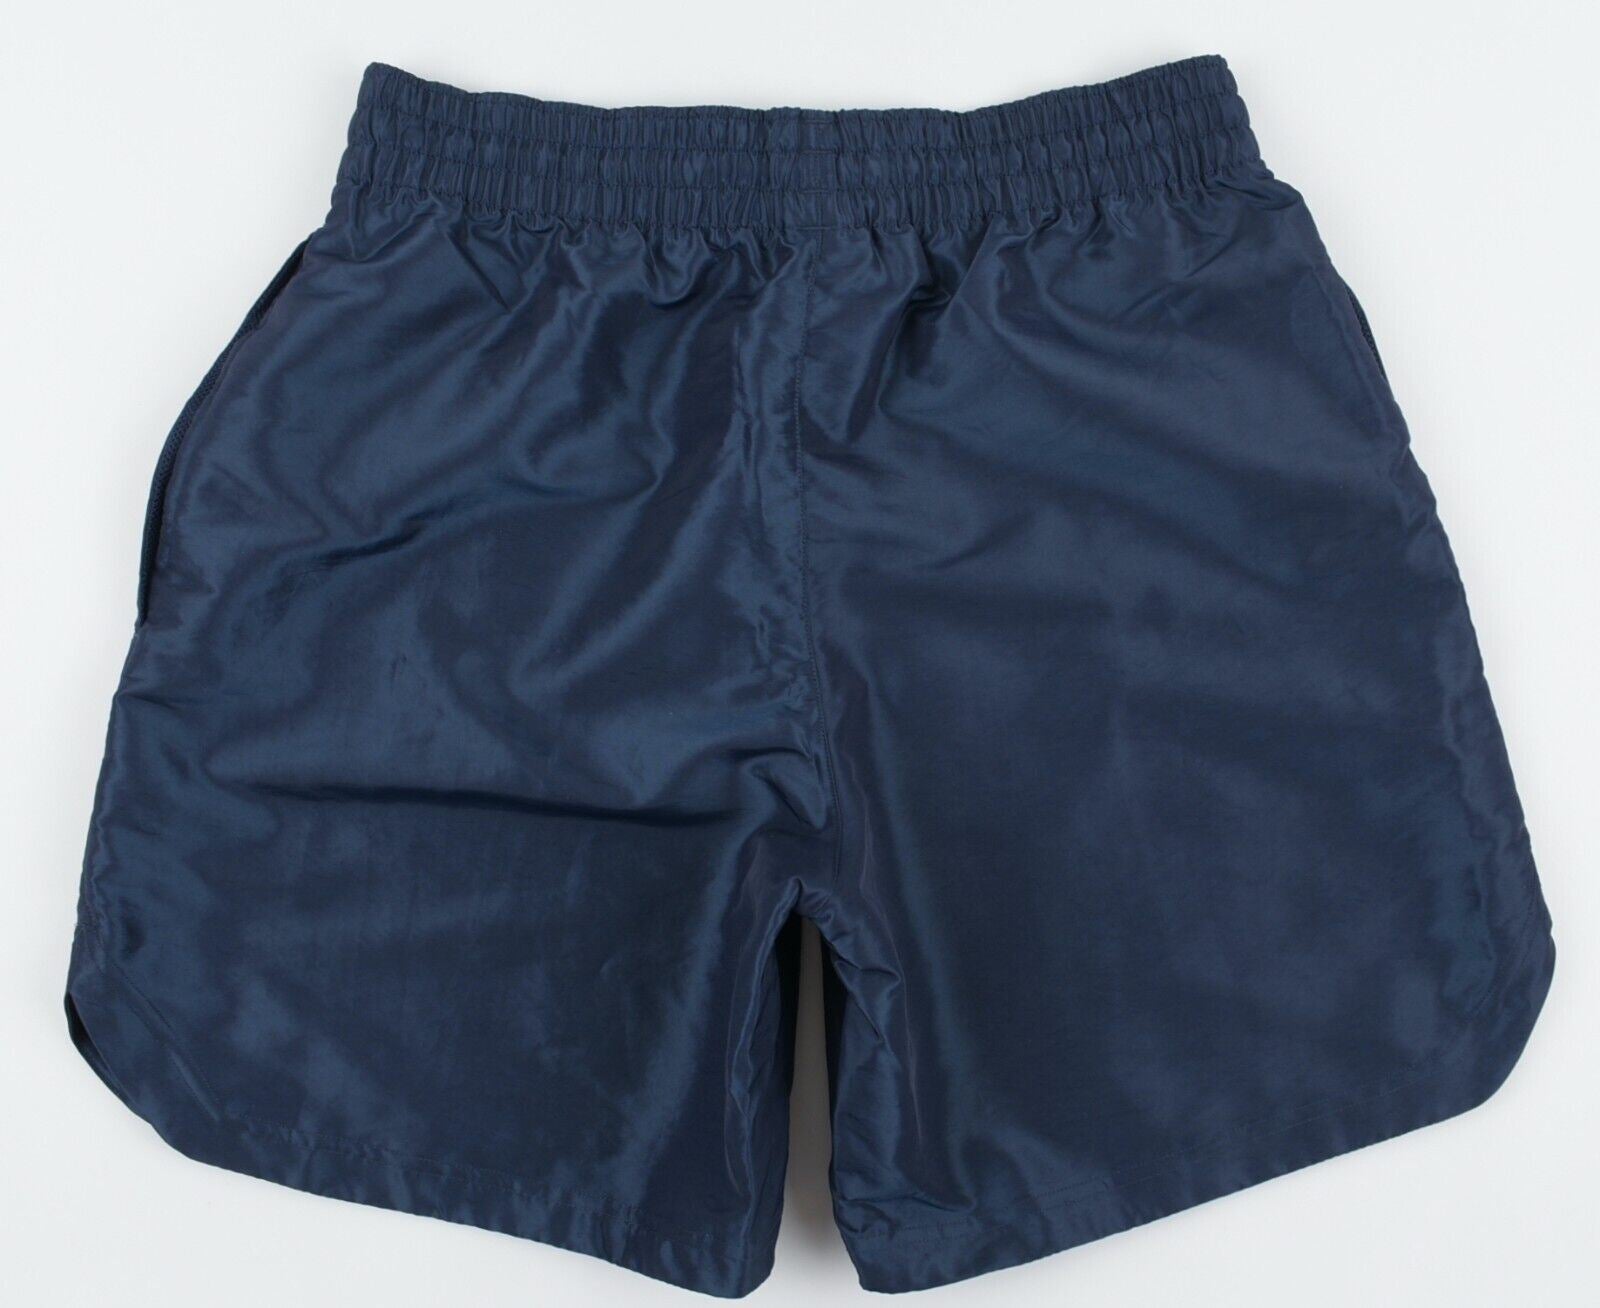 REEBOK Men's MYT Woven Training Shorts, Vector Navy (Blue), size S